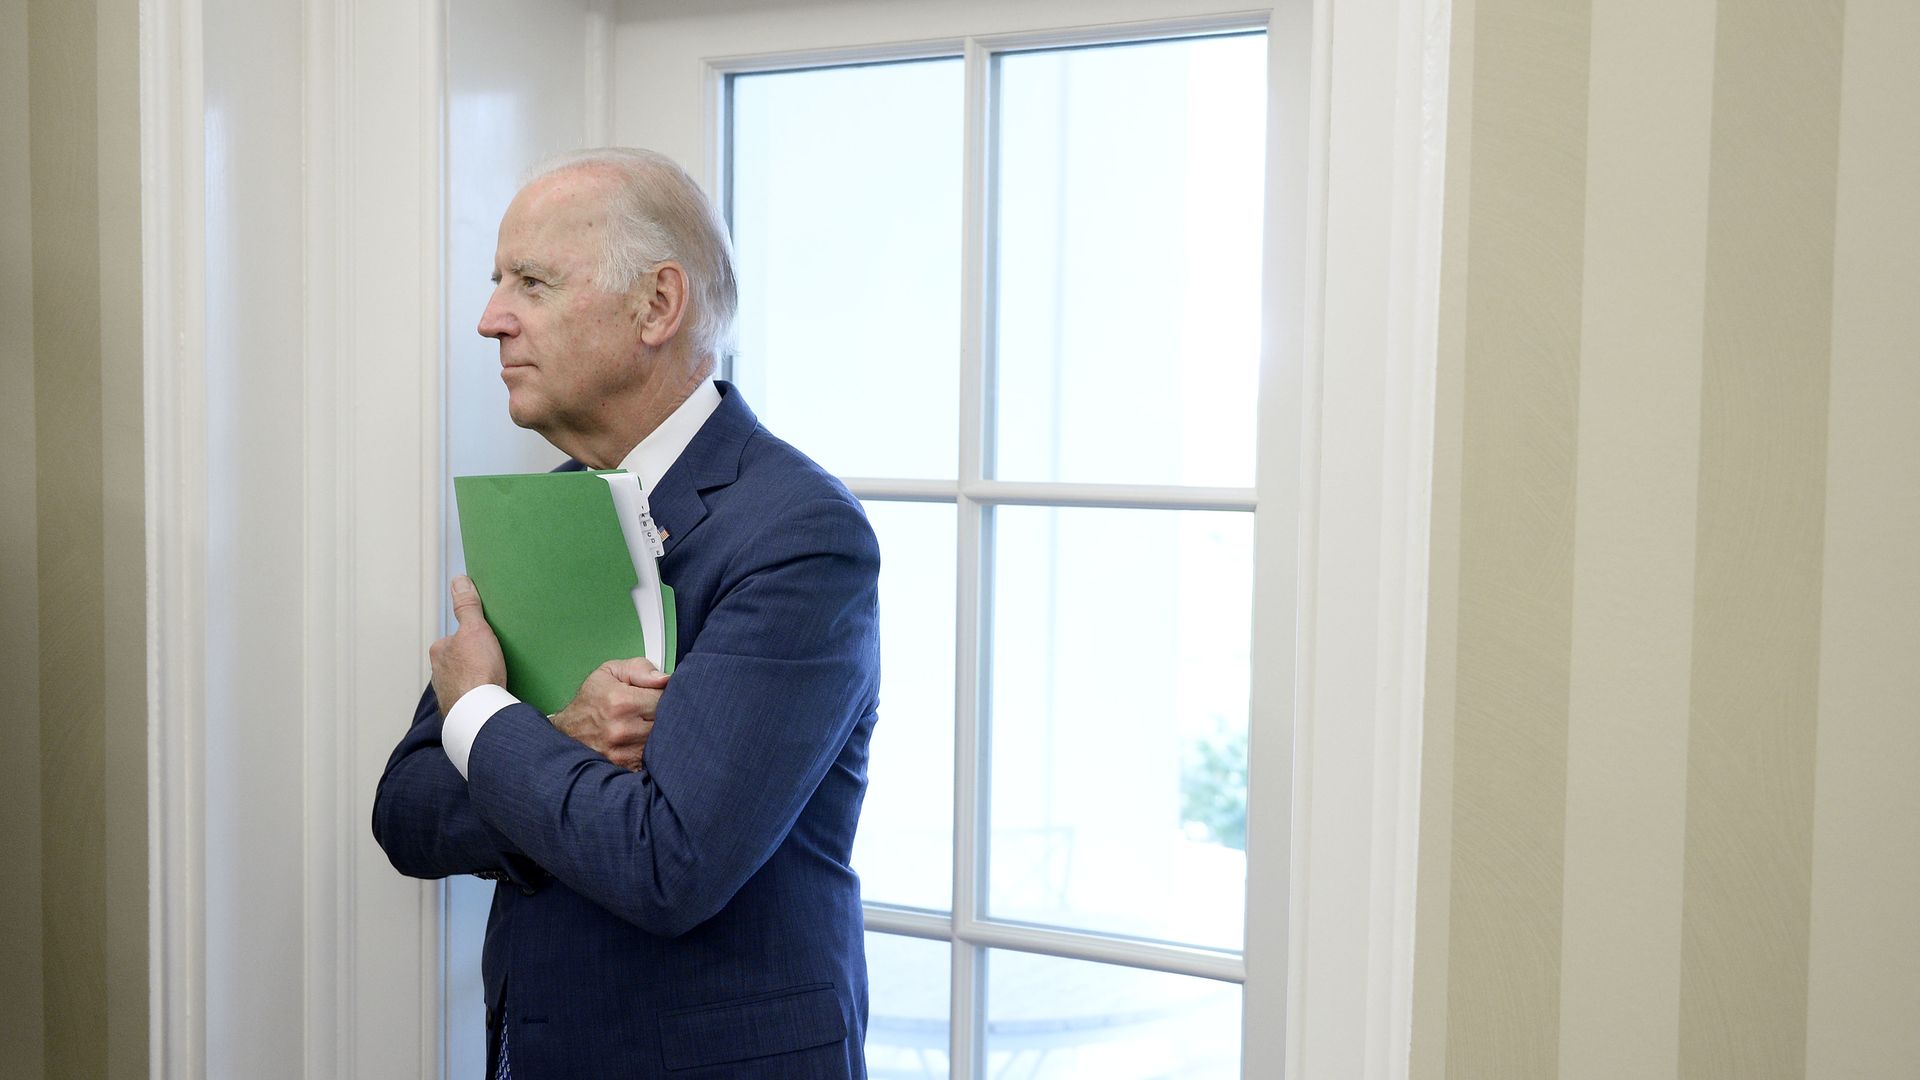 Then Vice President Joe Biden is seen looking on as President Obama met with Saudi officials in 2015.